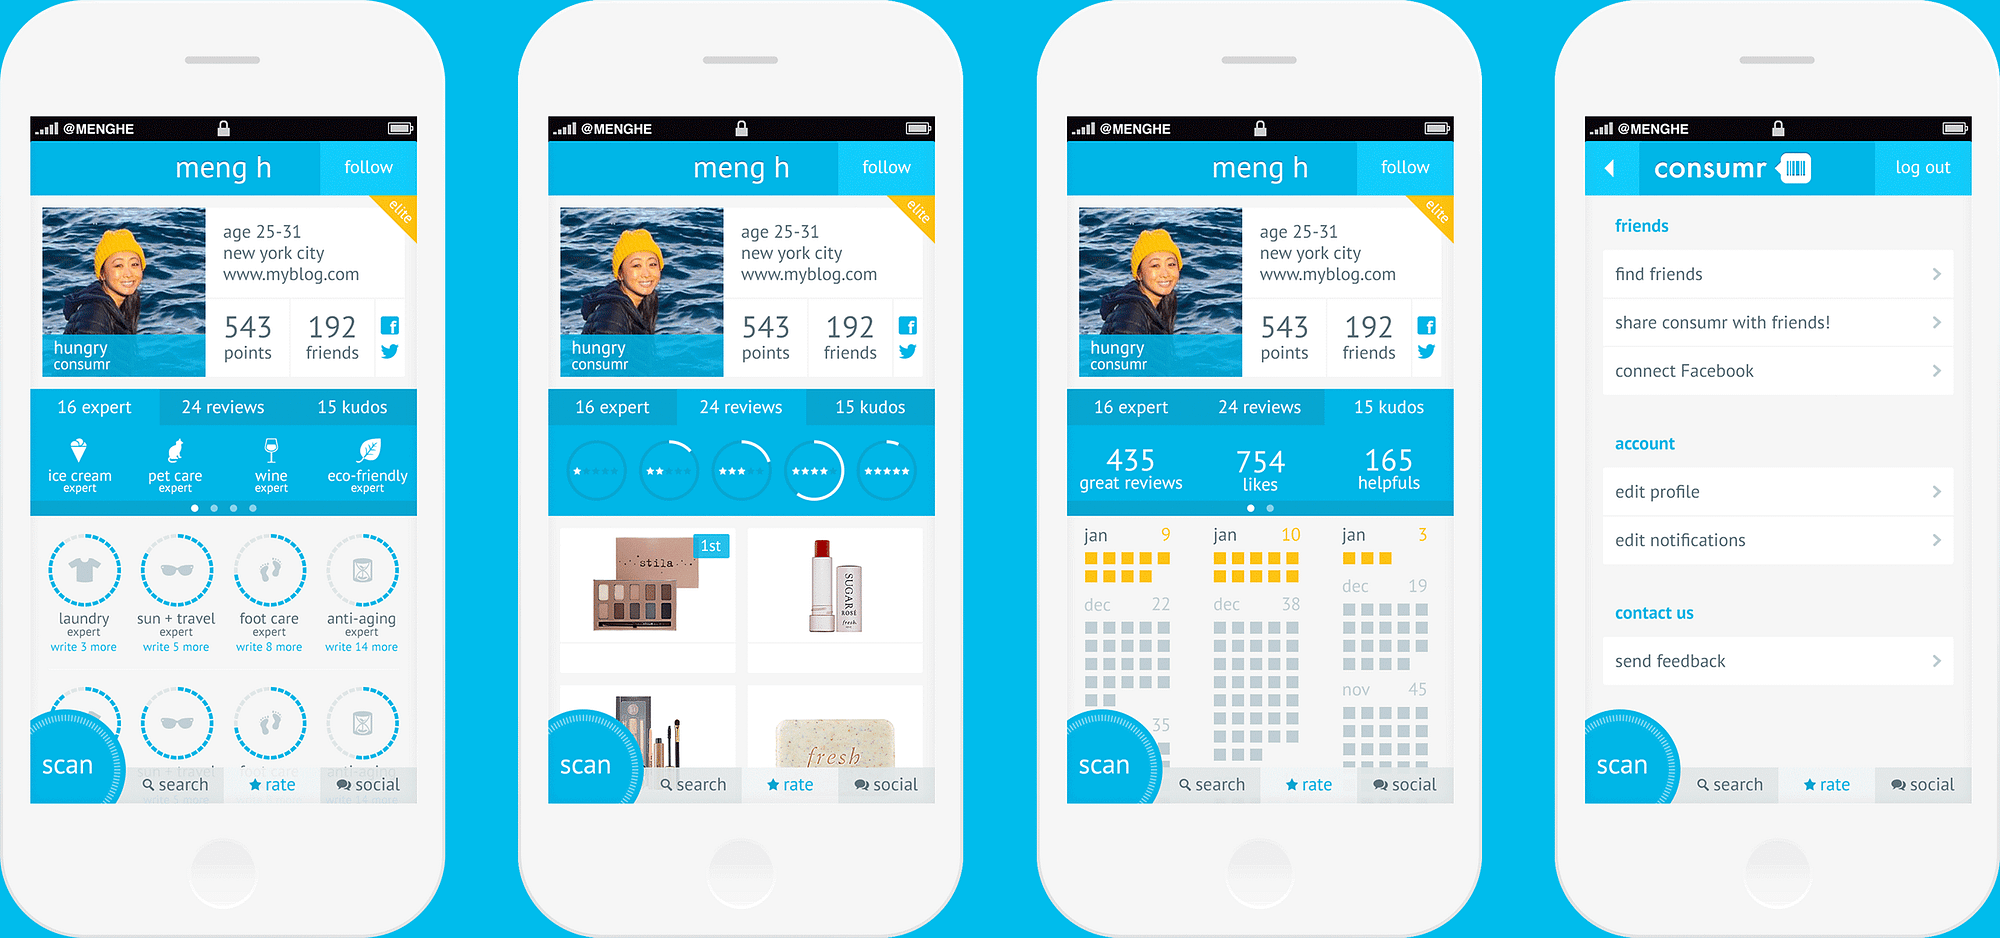 meng-he-consumr-final-app-design-profile